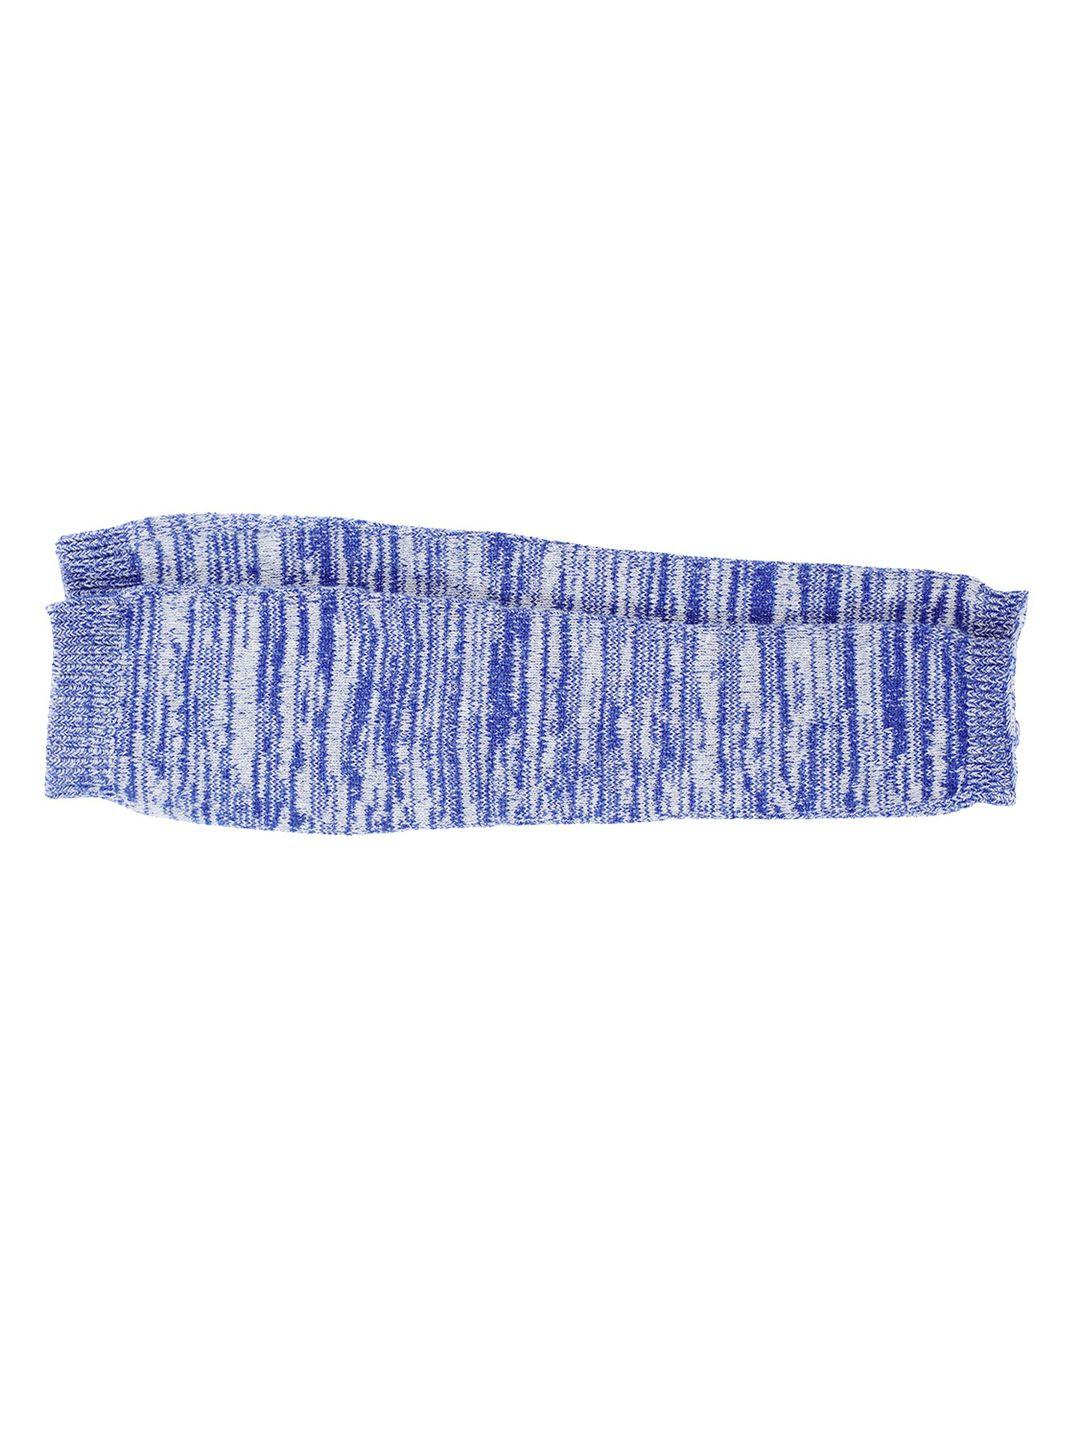 bharatasya blue self-design cotton activewear sun protection arm sleeves cover